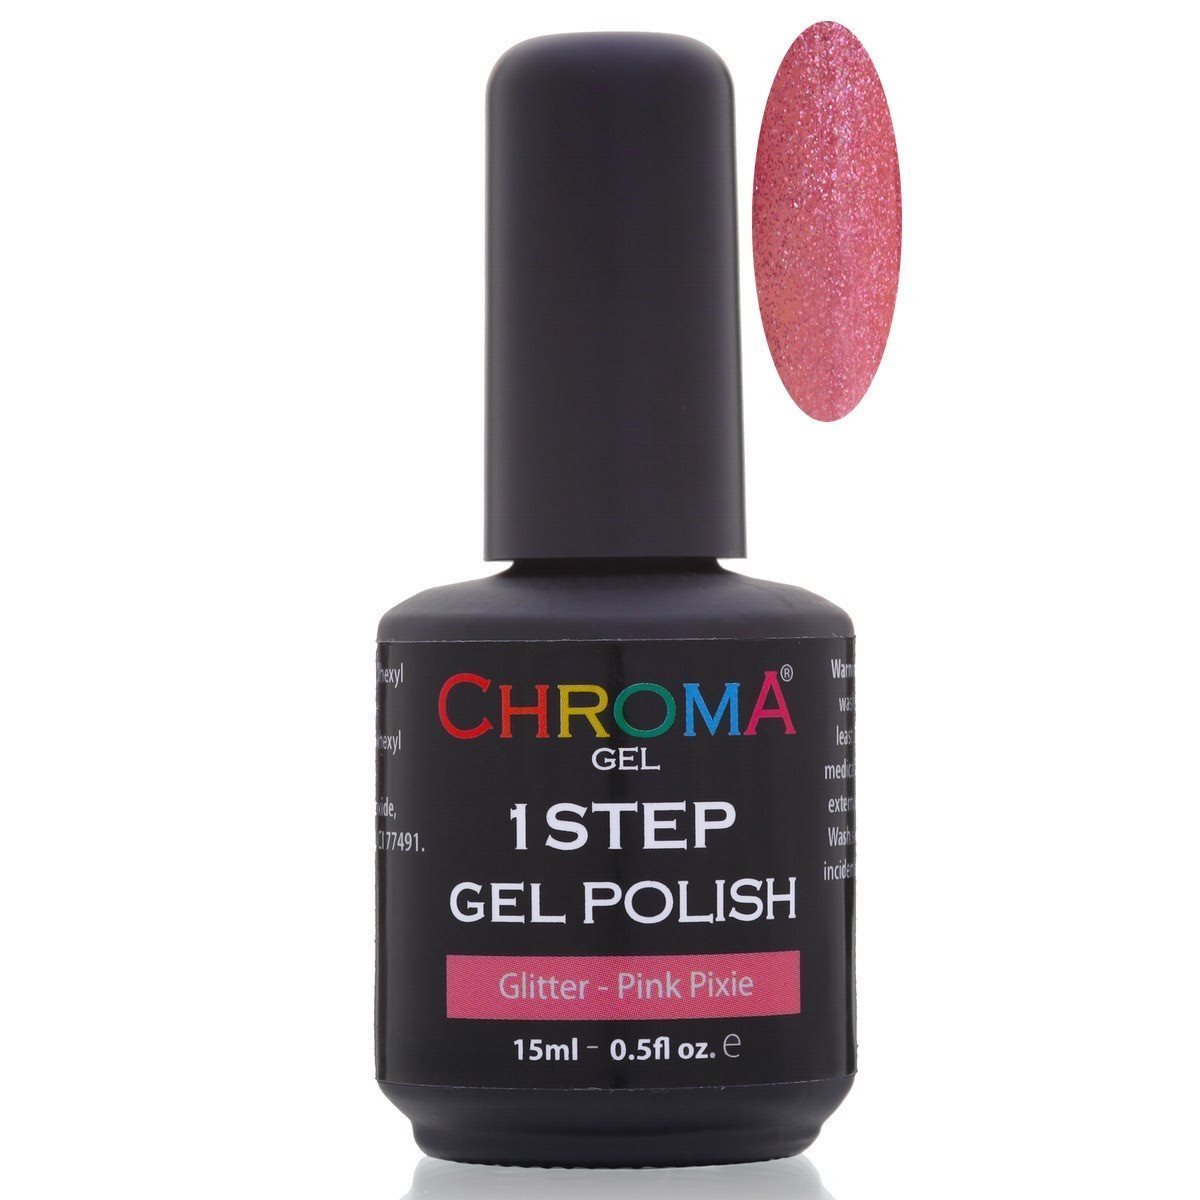 Chroma Gel 1 Step Gel Polish - Pink Pixie No.16: Long-lasting, Stunning Shine - beautyhair.co.ukChroma Gel